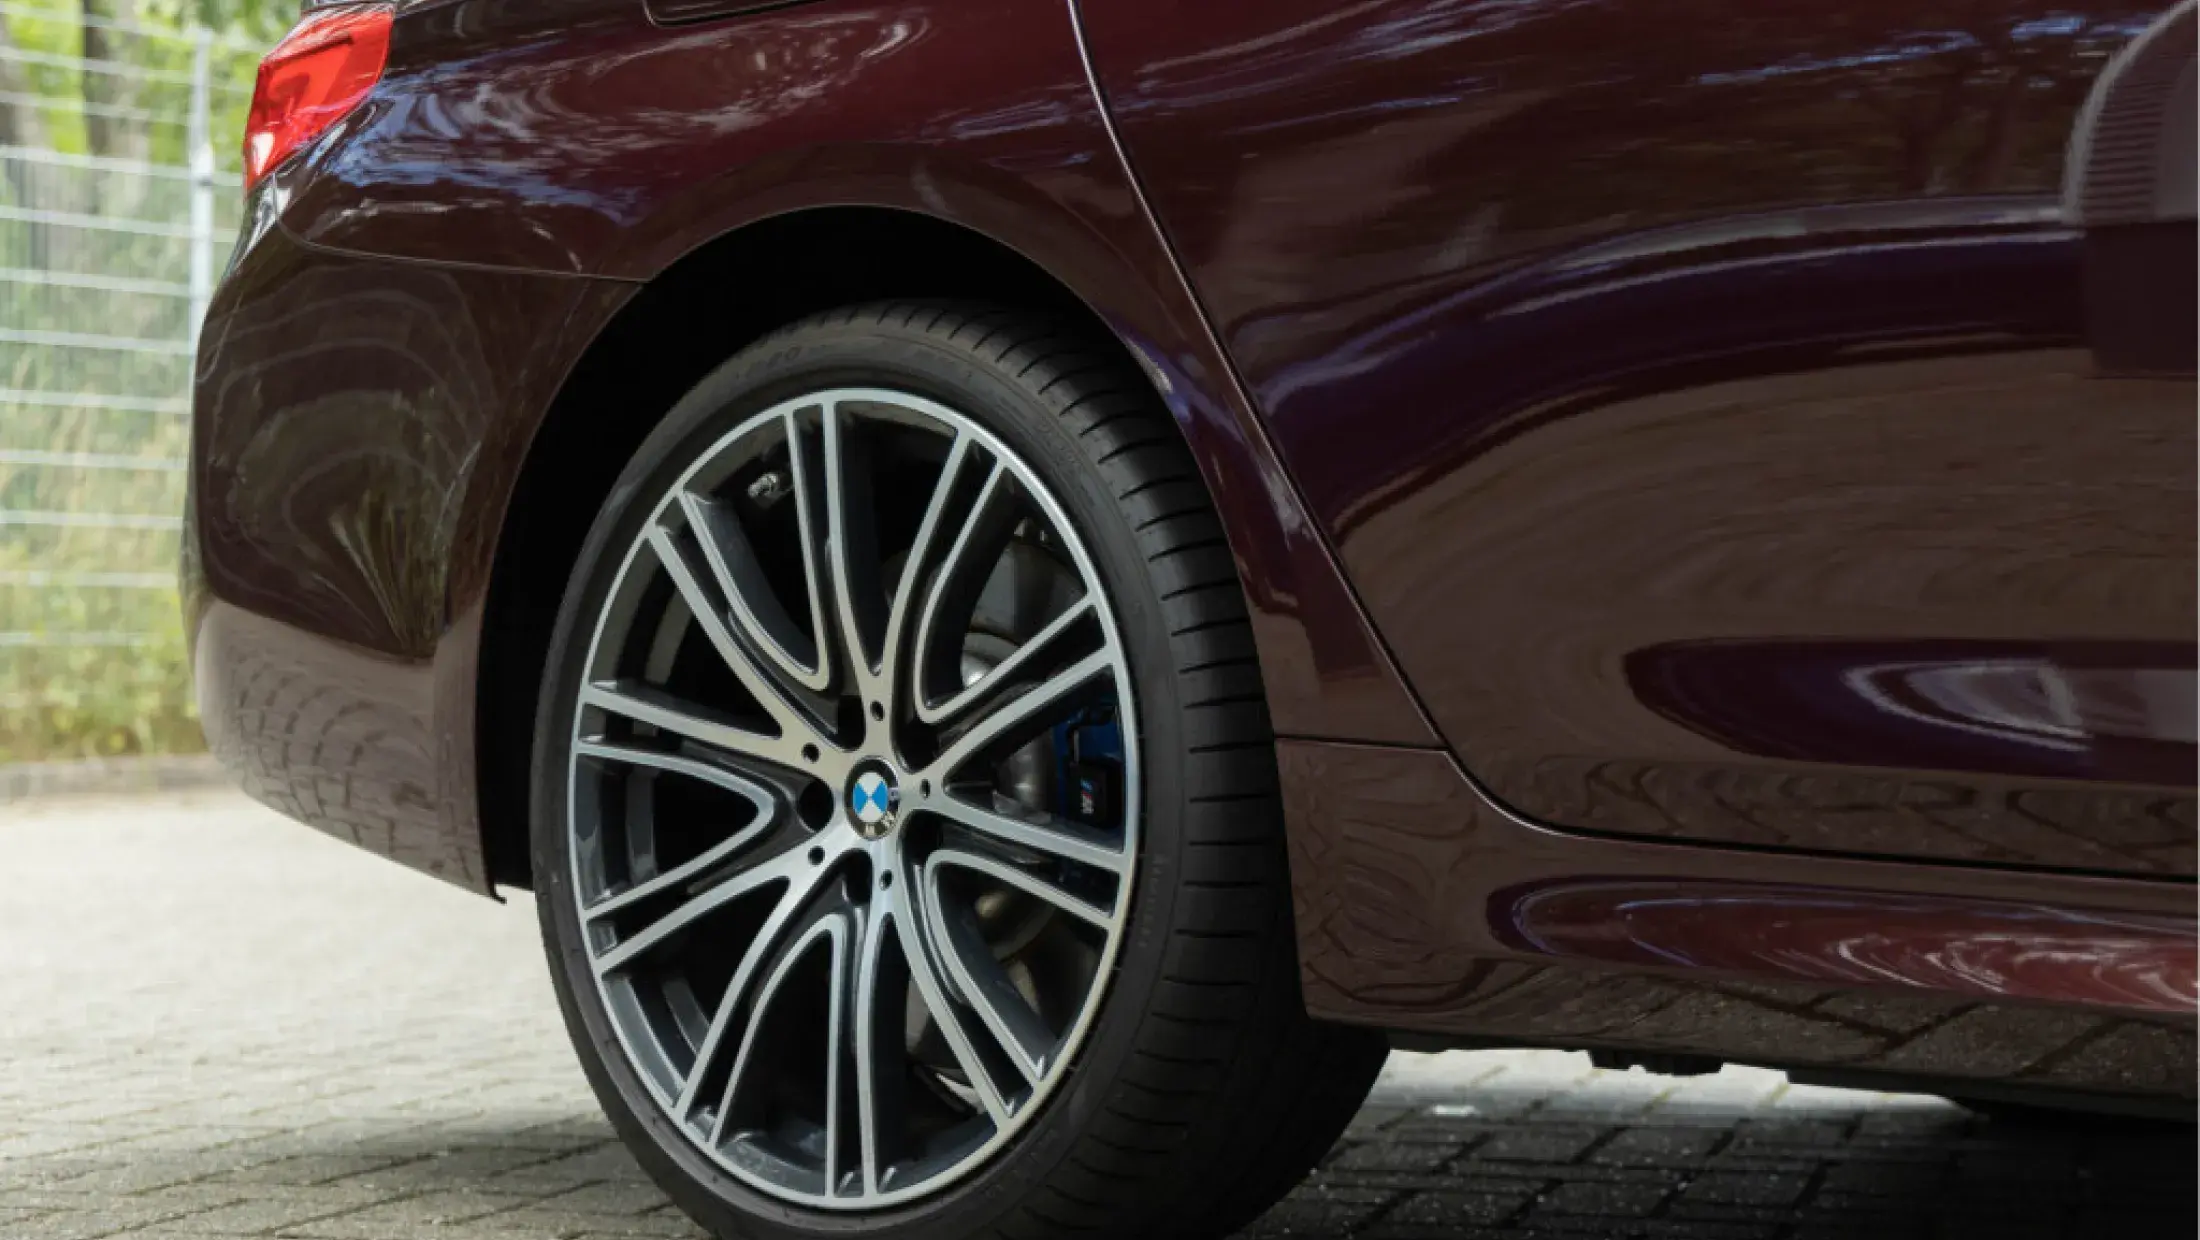 BMW 540i Sedan Individual Special Request Barbera Rot Metallic G30 Exklusivleder Nappa Schwarz